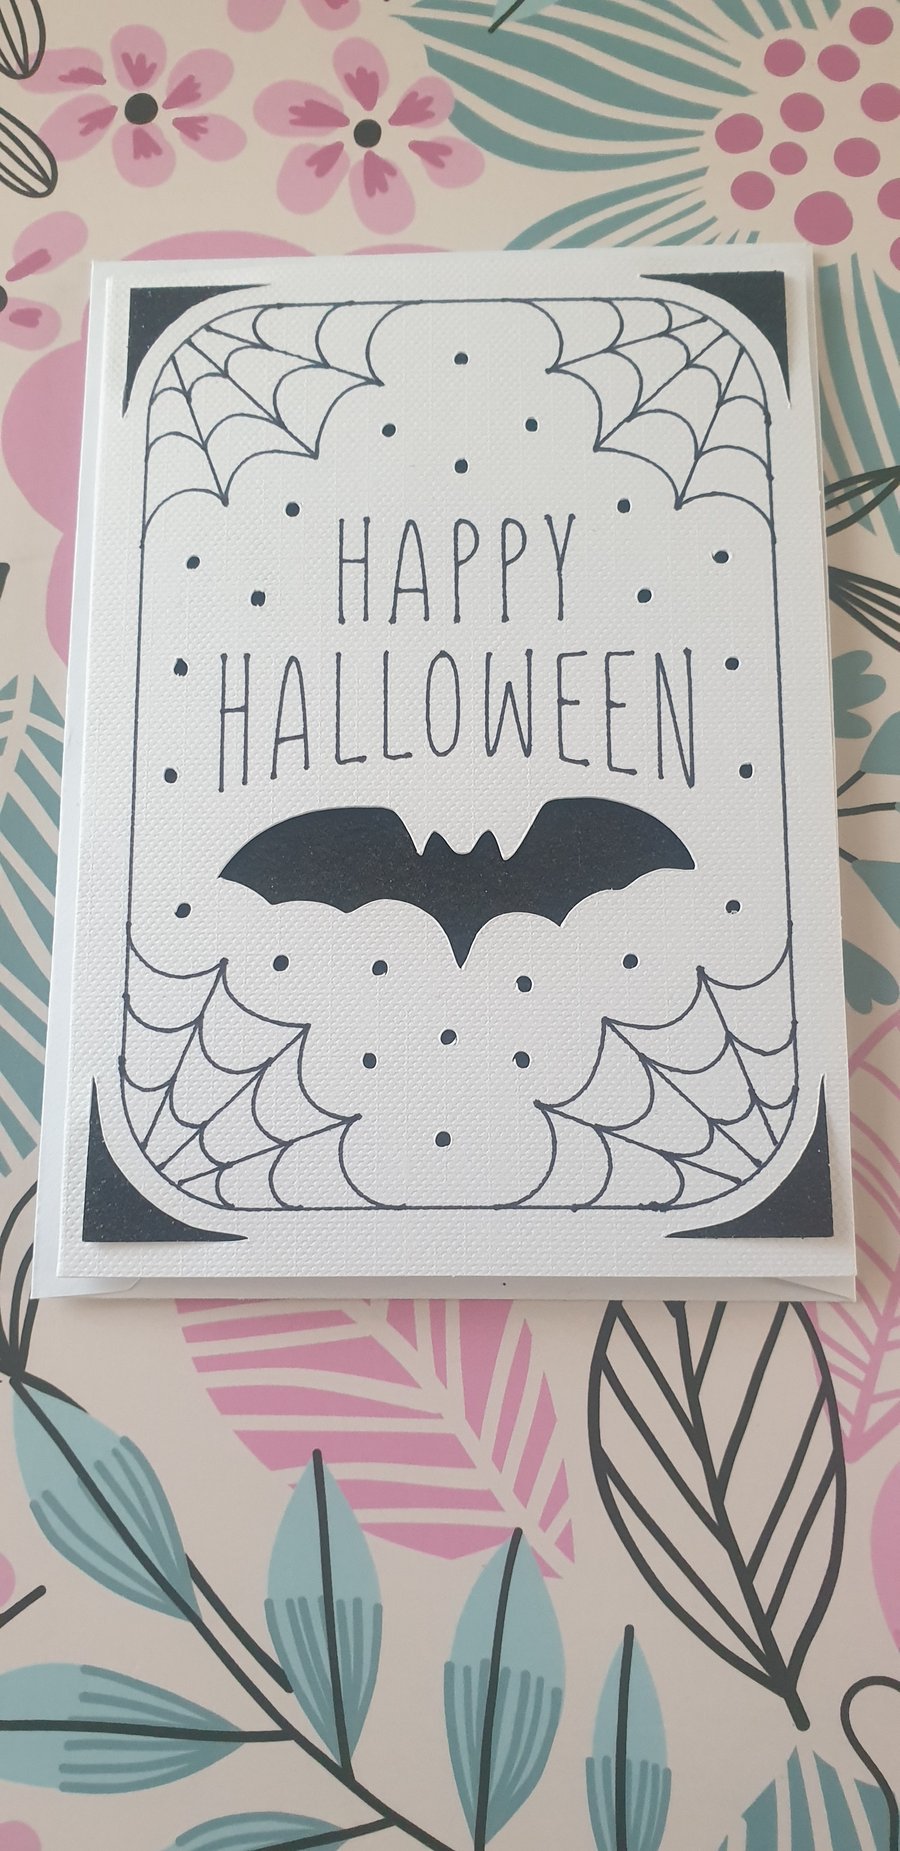 Small black halloween card